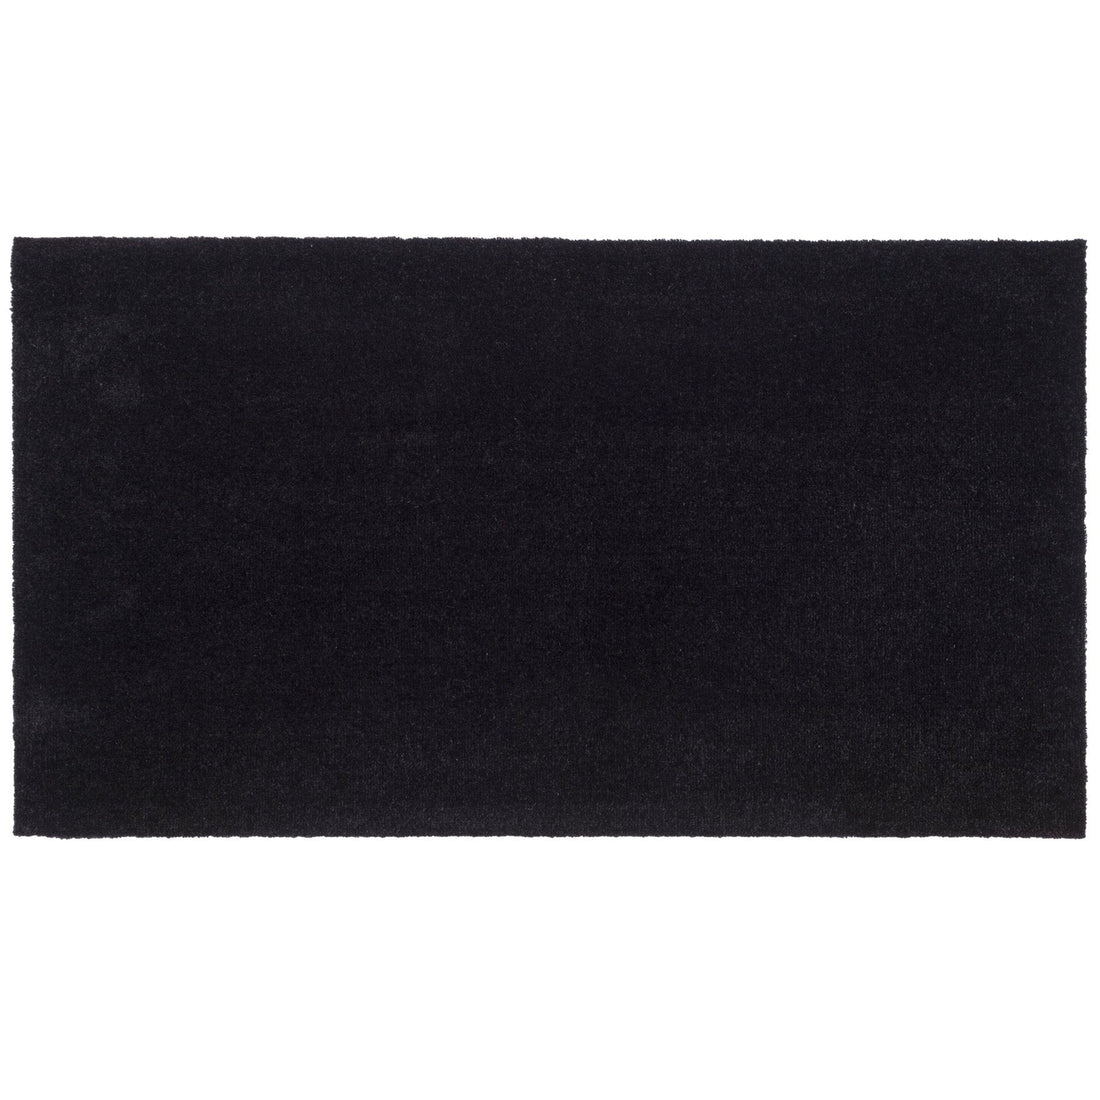 MEDIDA DE GULF 90 x 130 cm - UNI COLOUR/BLACK